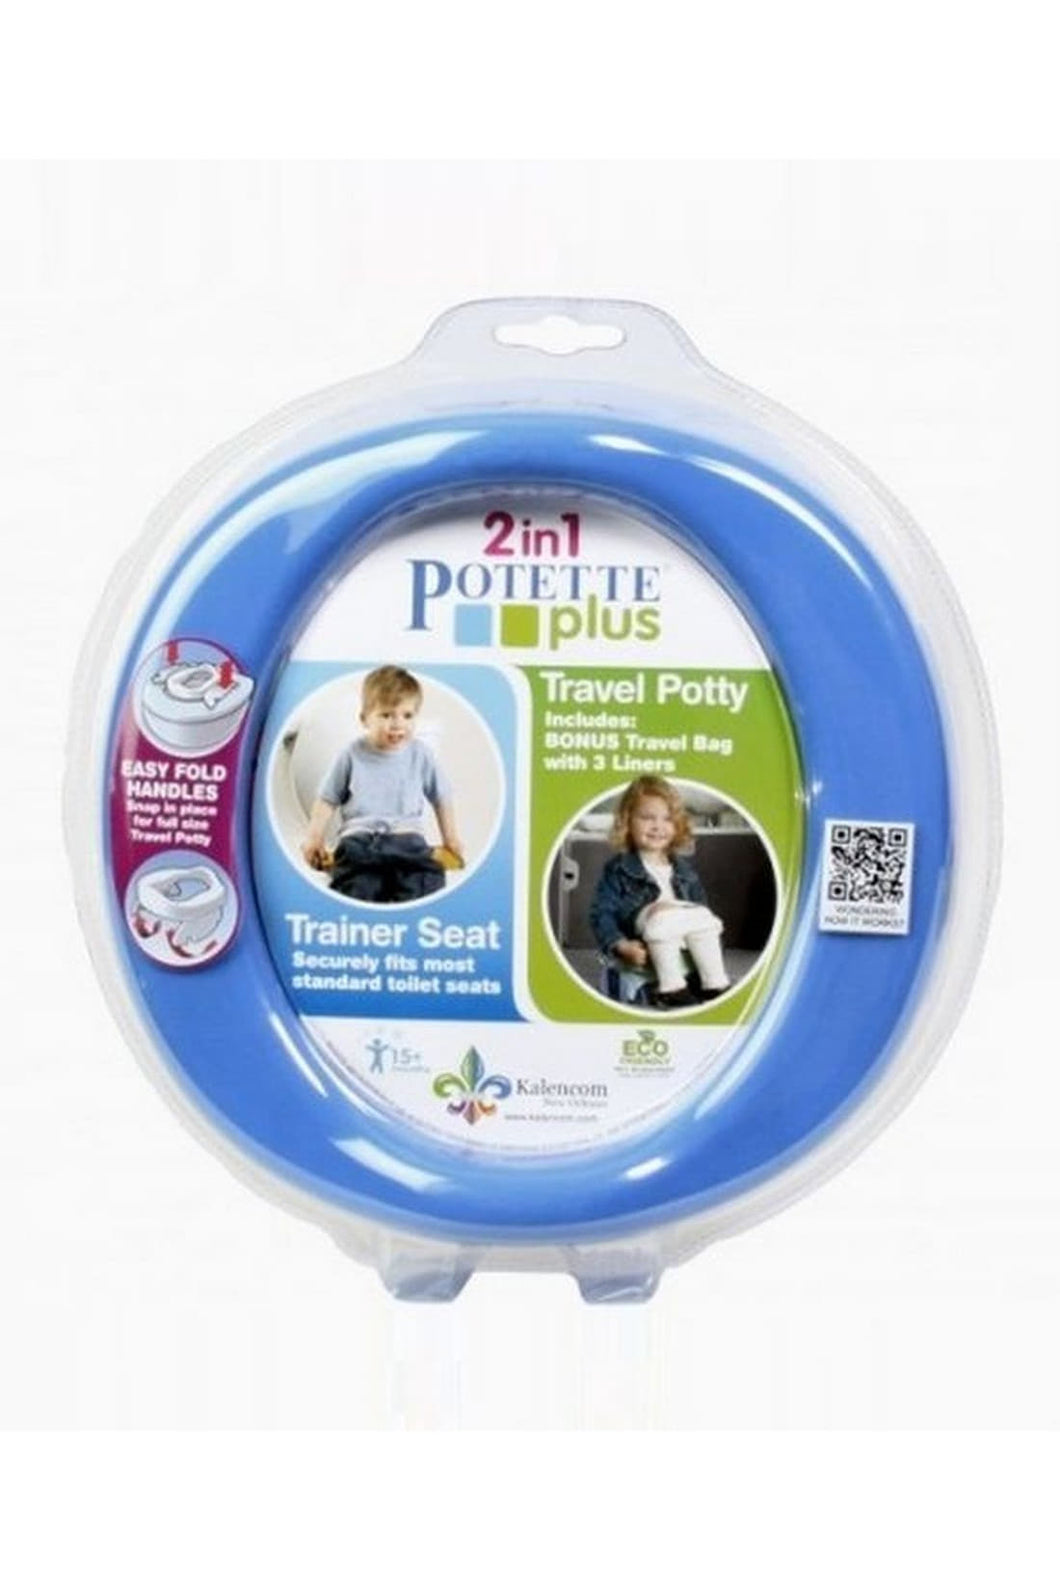 Potette Plus 2 In 1 Portable Potty